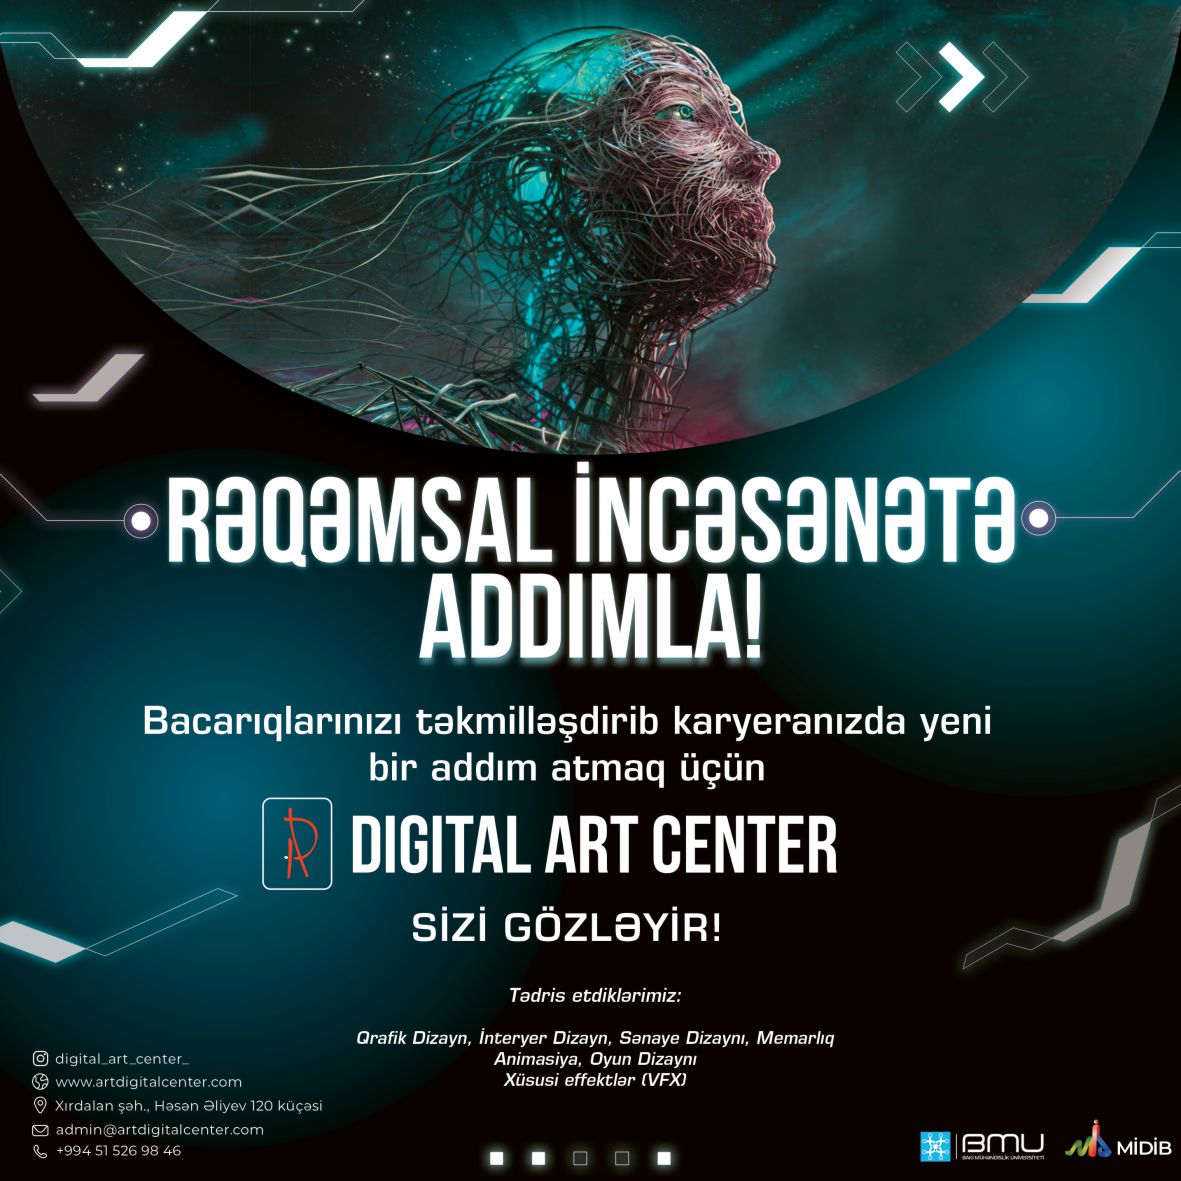 BMU-da “Digital Art Center” adlı təlim kursları